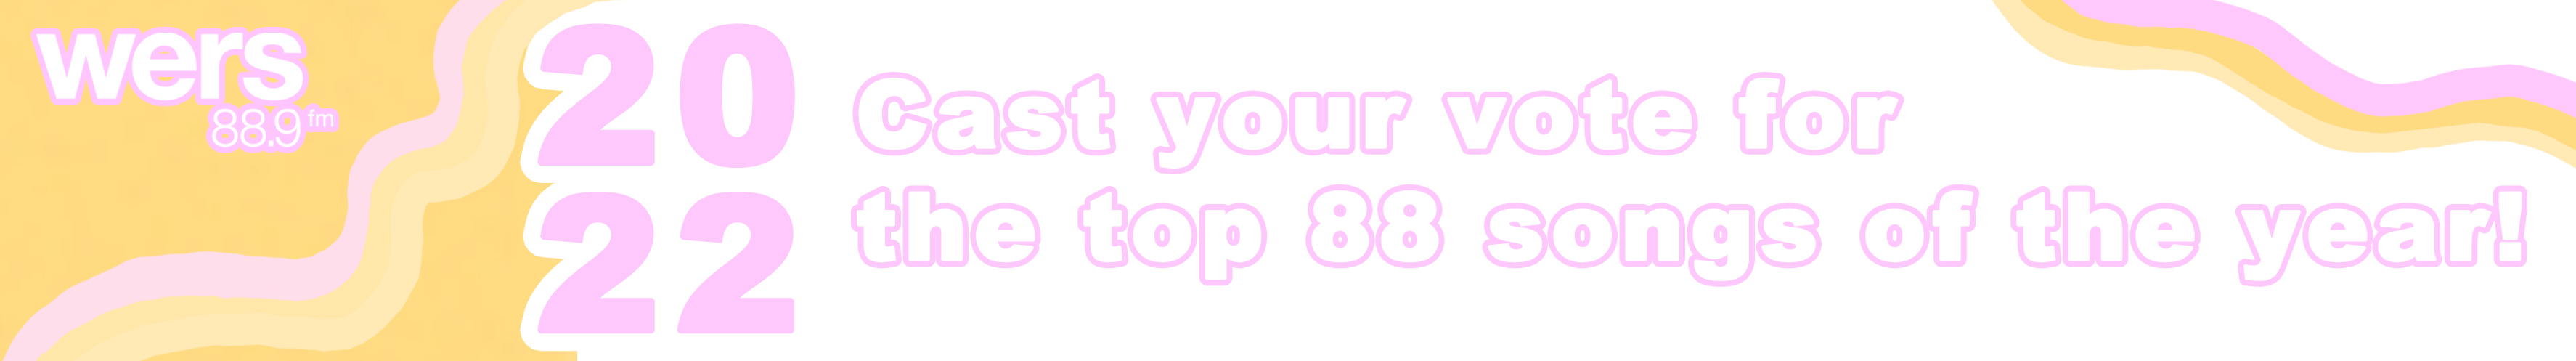 top 88 voting 2022 - WERS 88.9FM